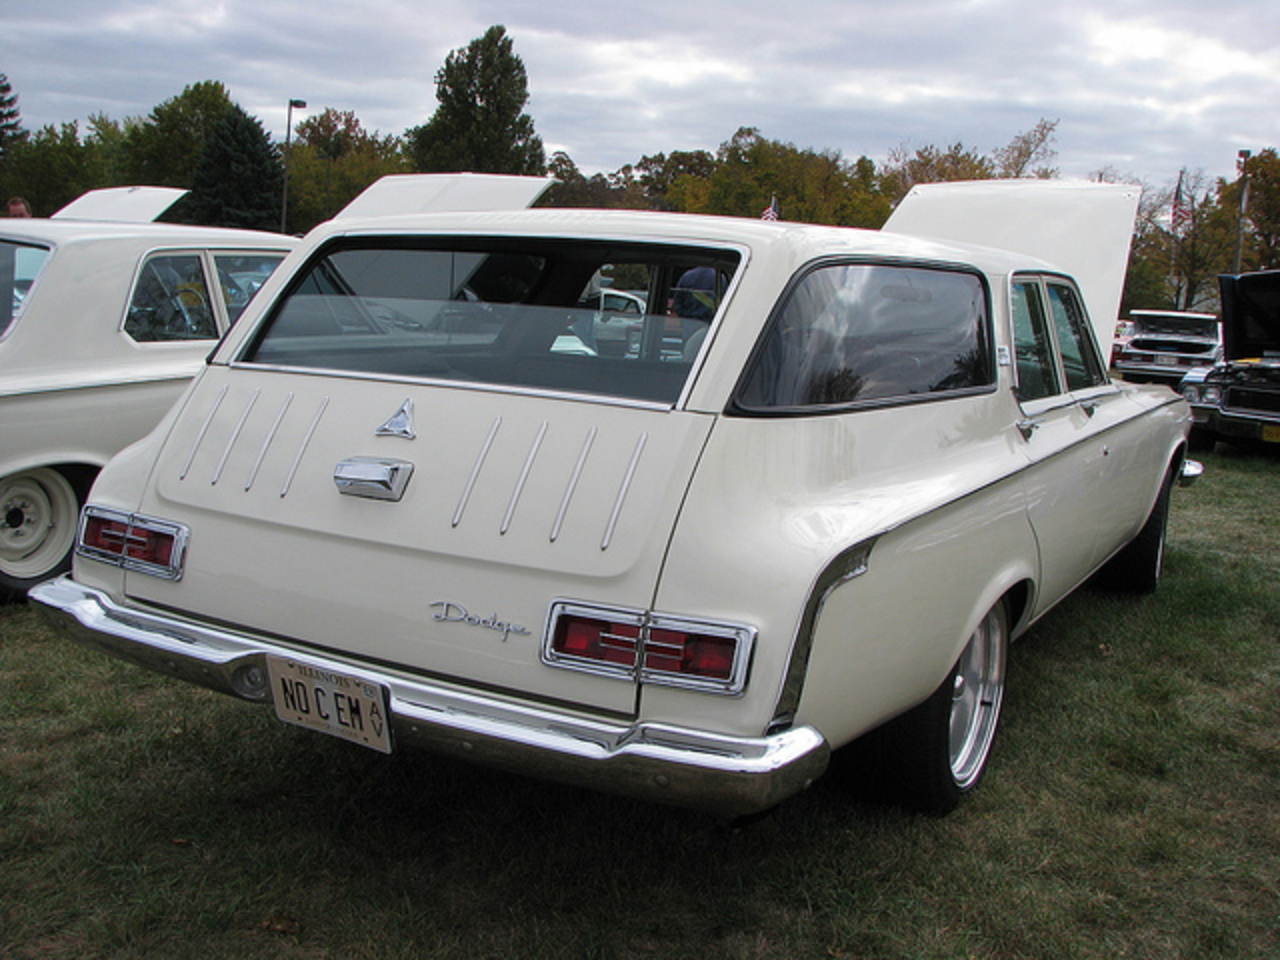 Dodge 330 wagon | Flickr - Photo Sharing!